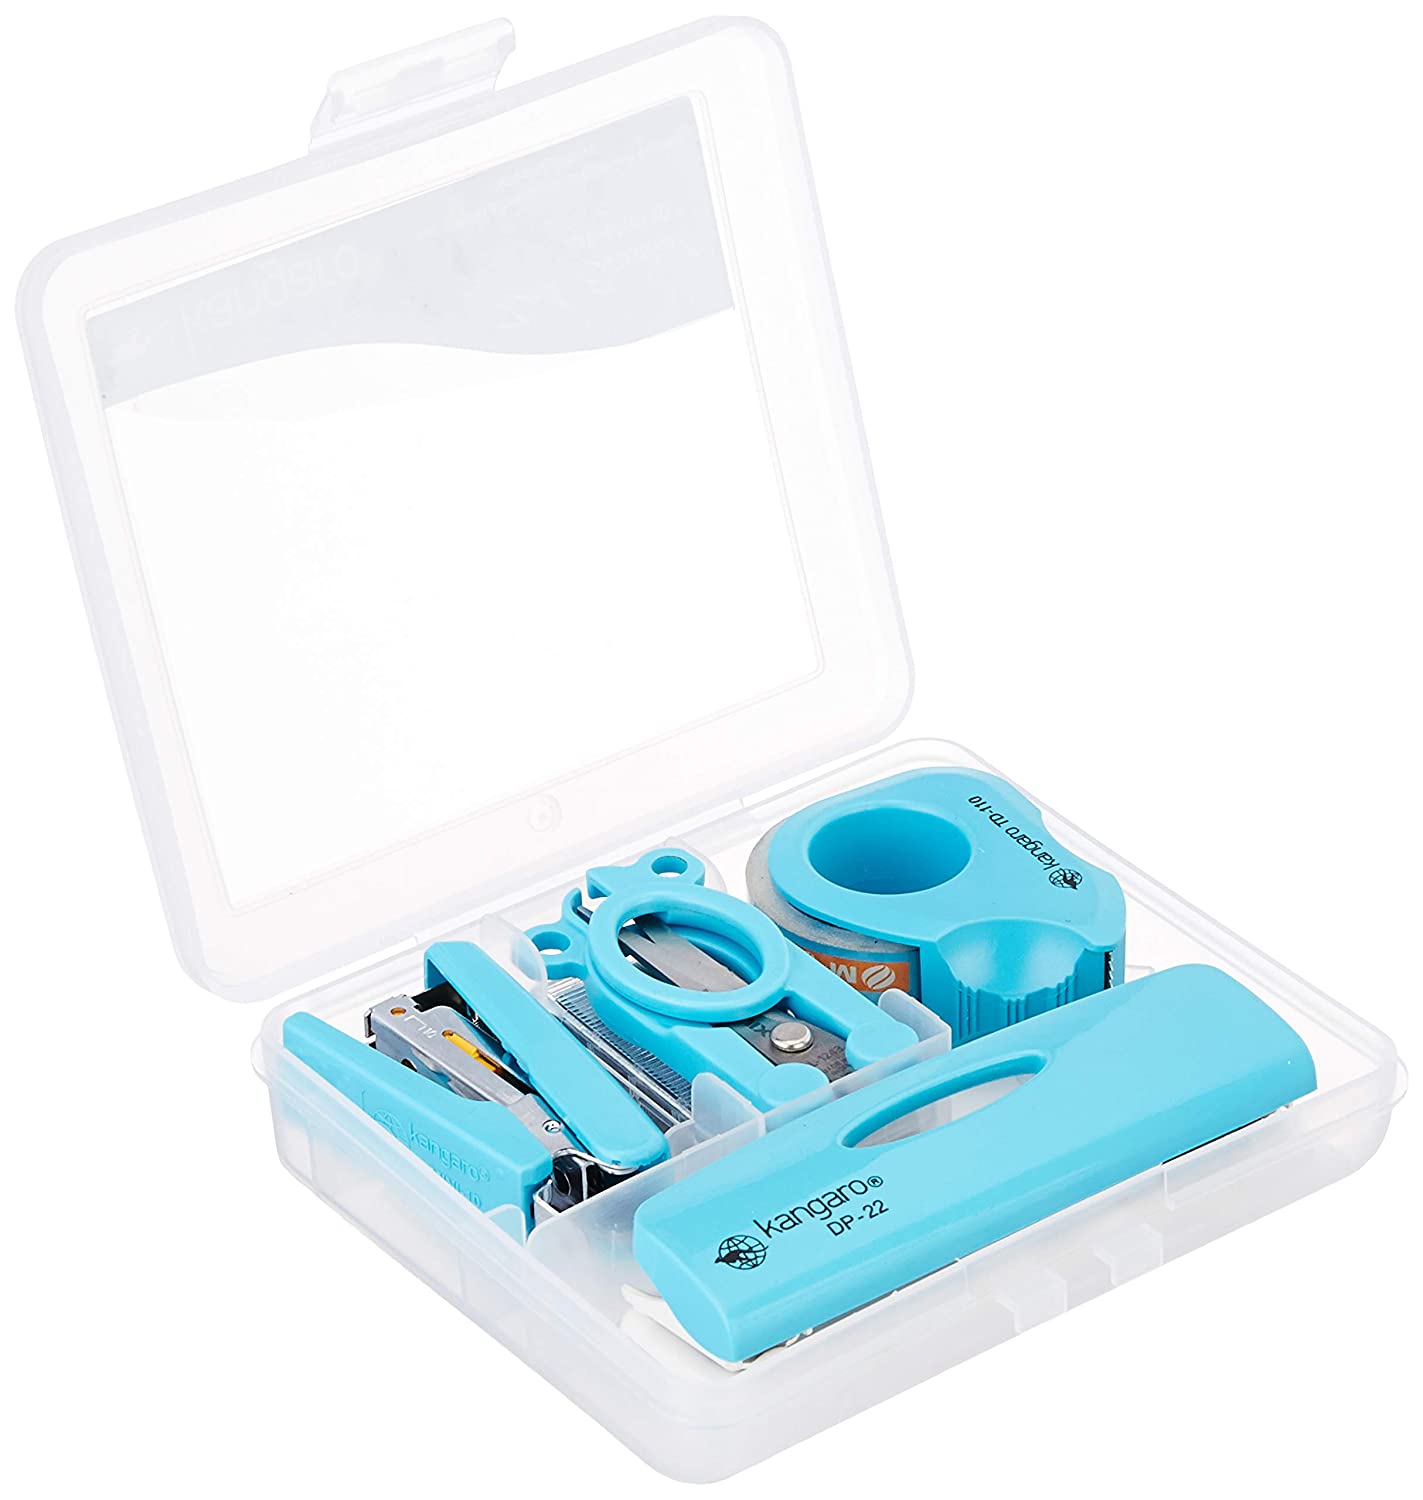 Kangaro Desk Essentials DE-Mini 10 Combo Pack |Stationery Gift Set